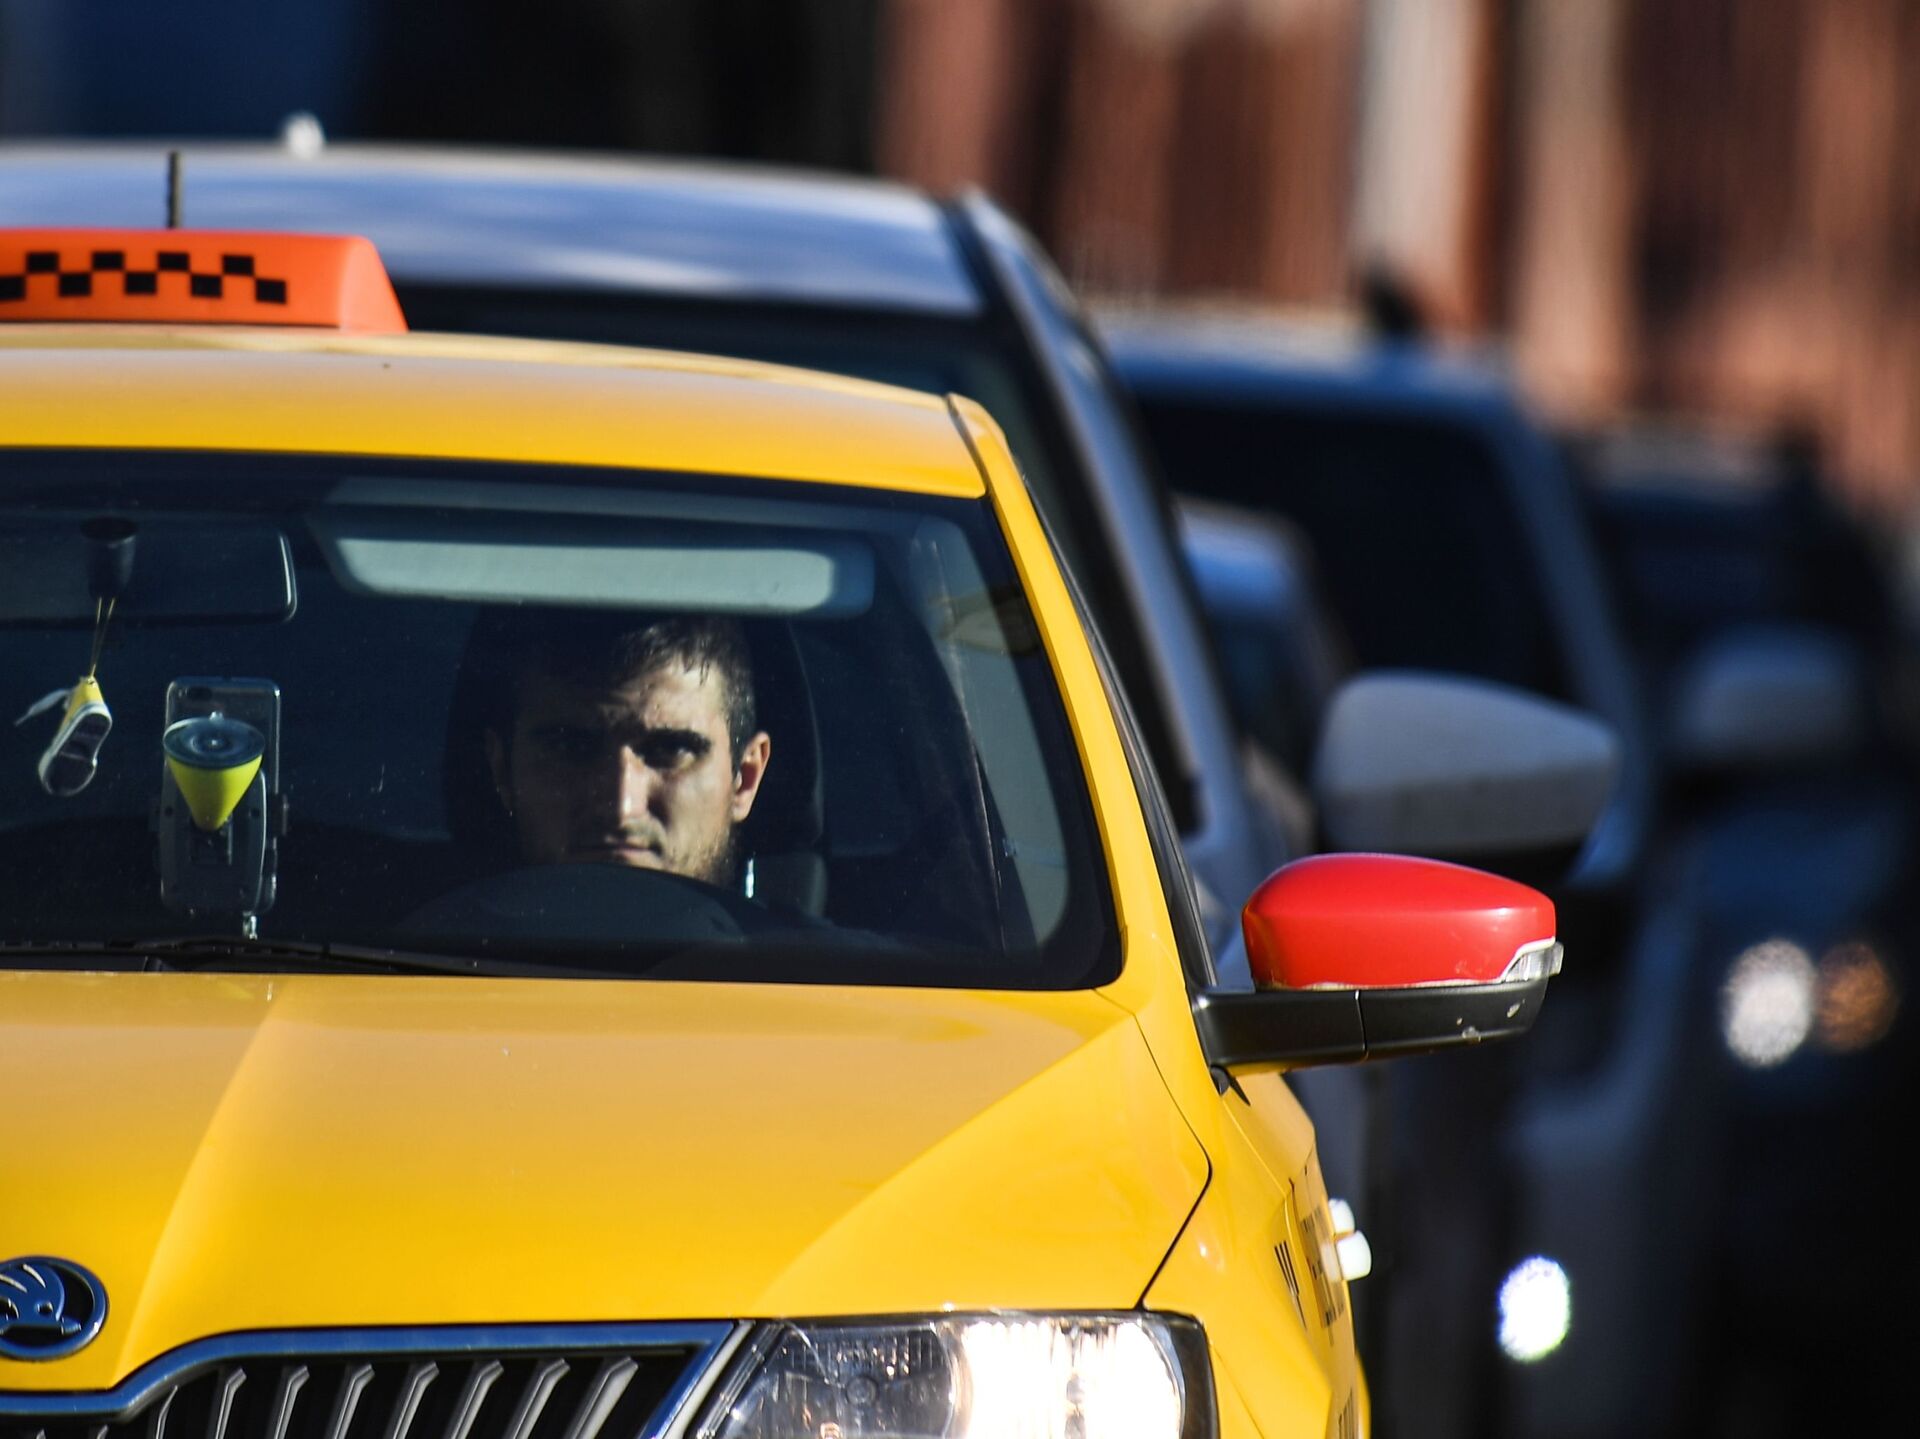 Версия водителя такси. Водитель такси. Такси фото. Таксист. Водитель такси фото.